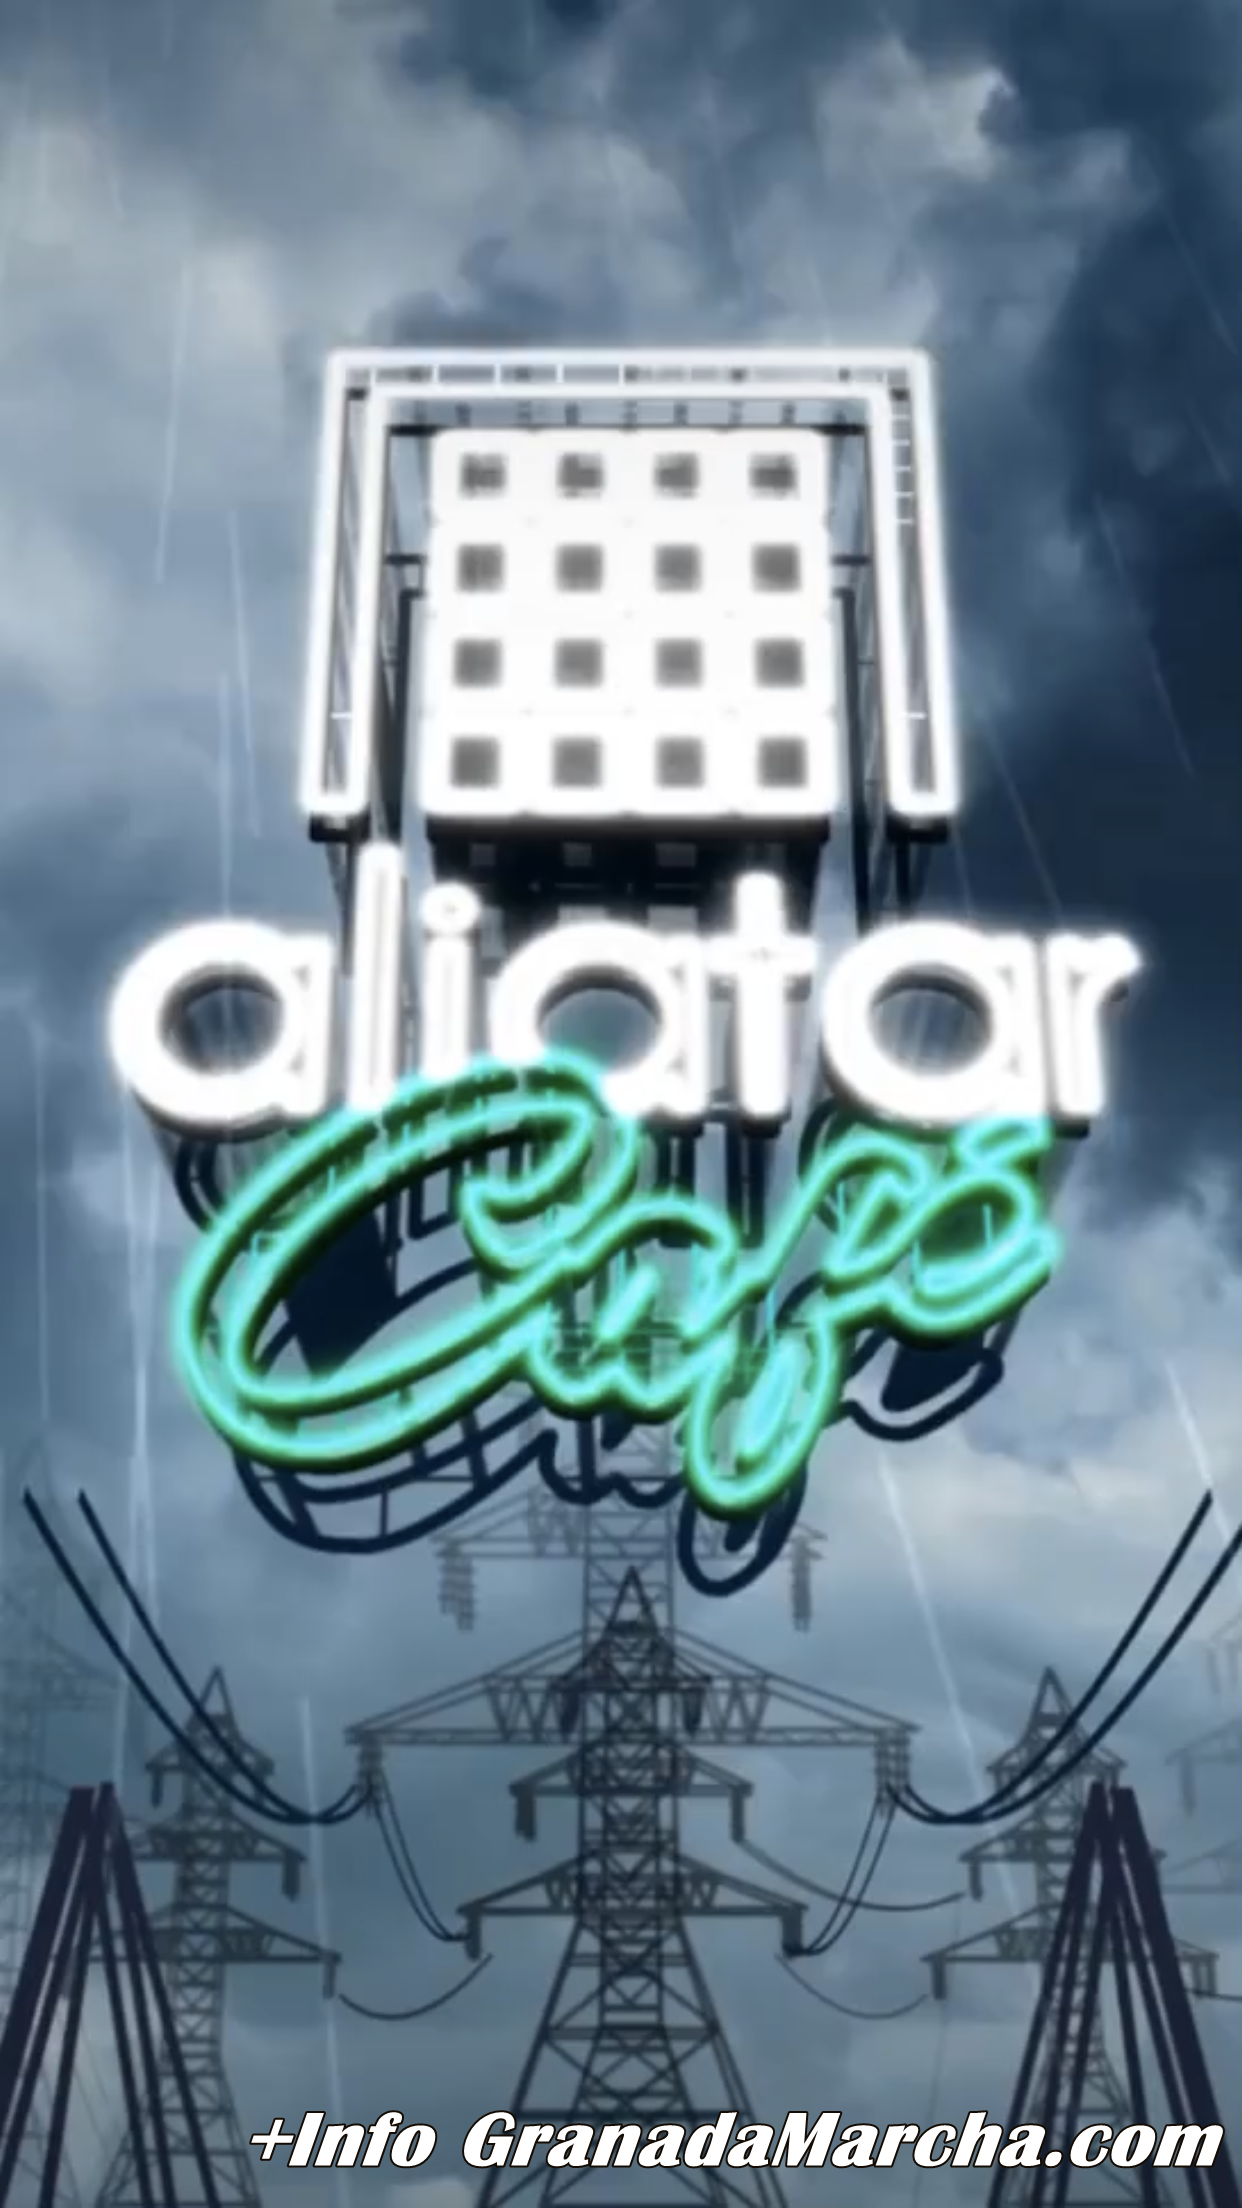 Reapertura Discoteca Aliatar